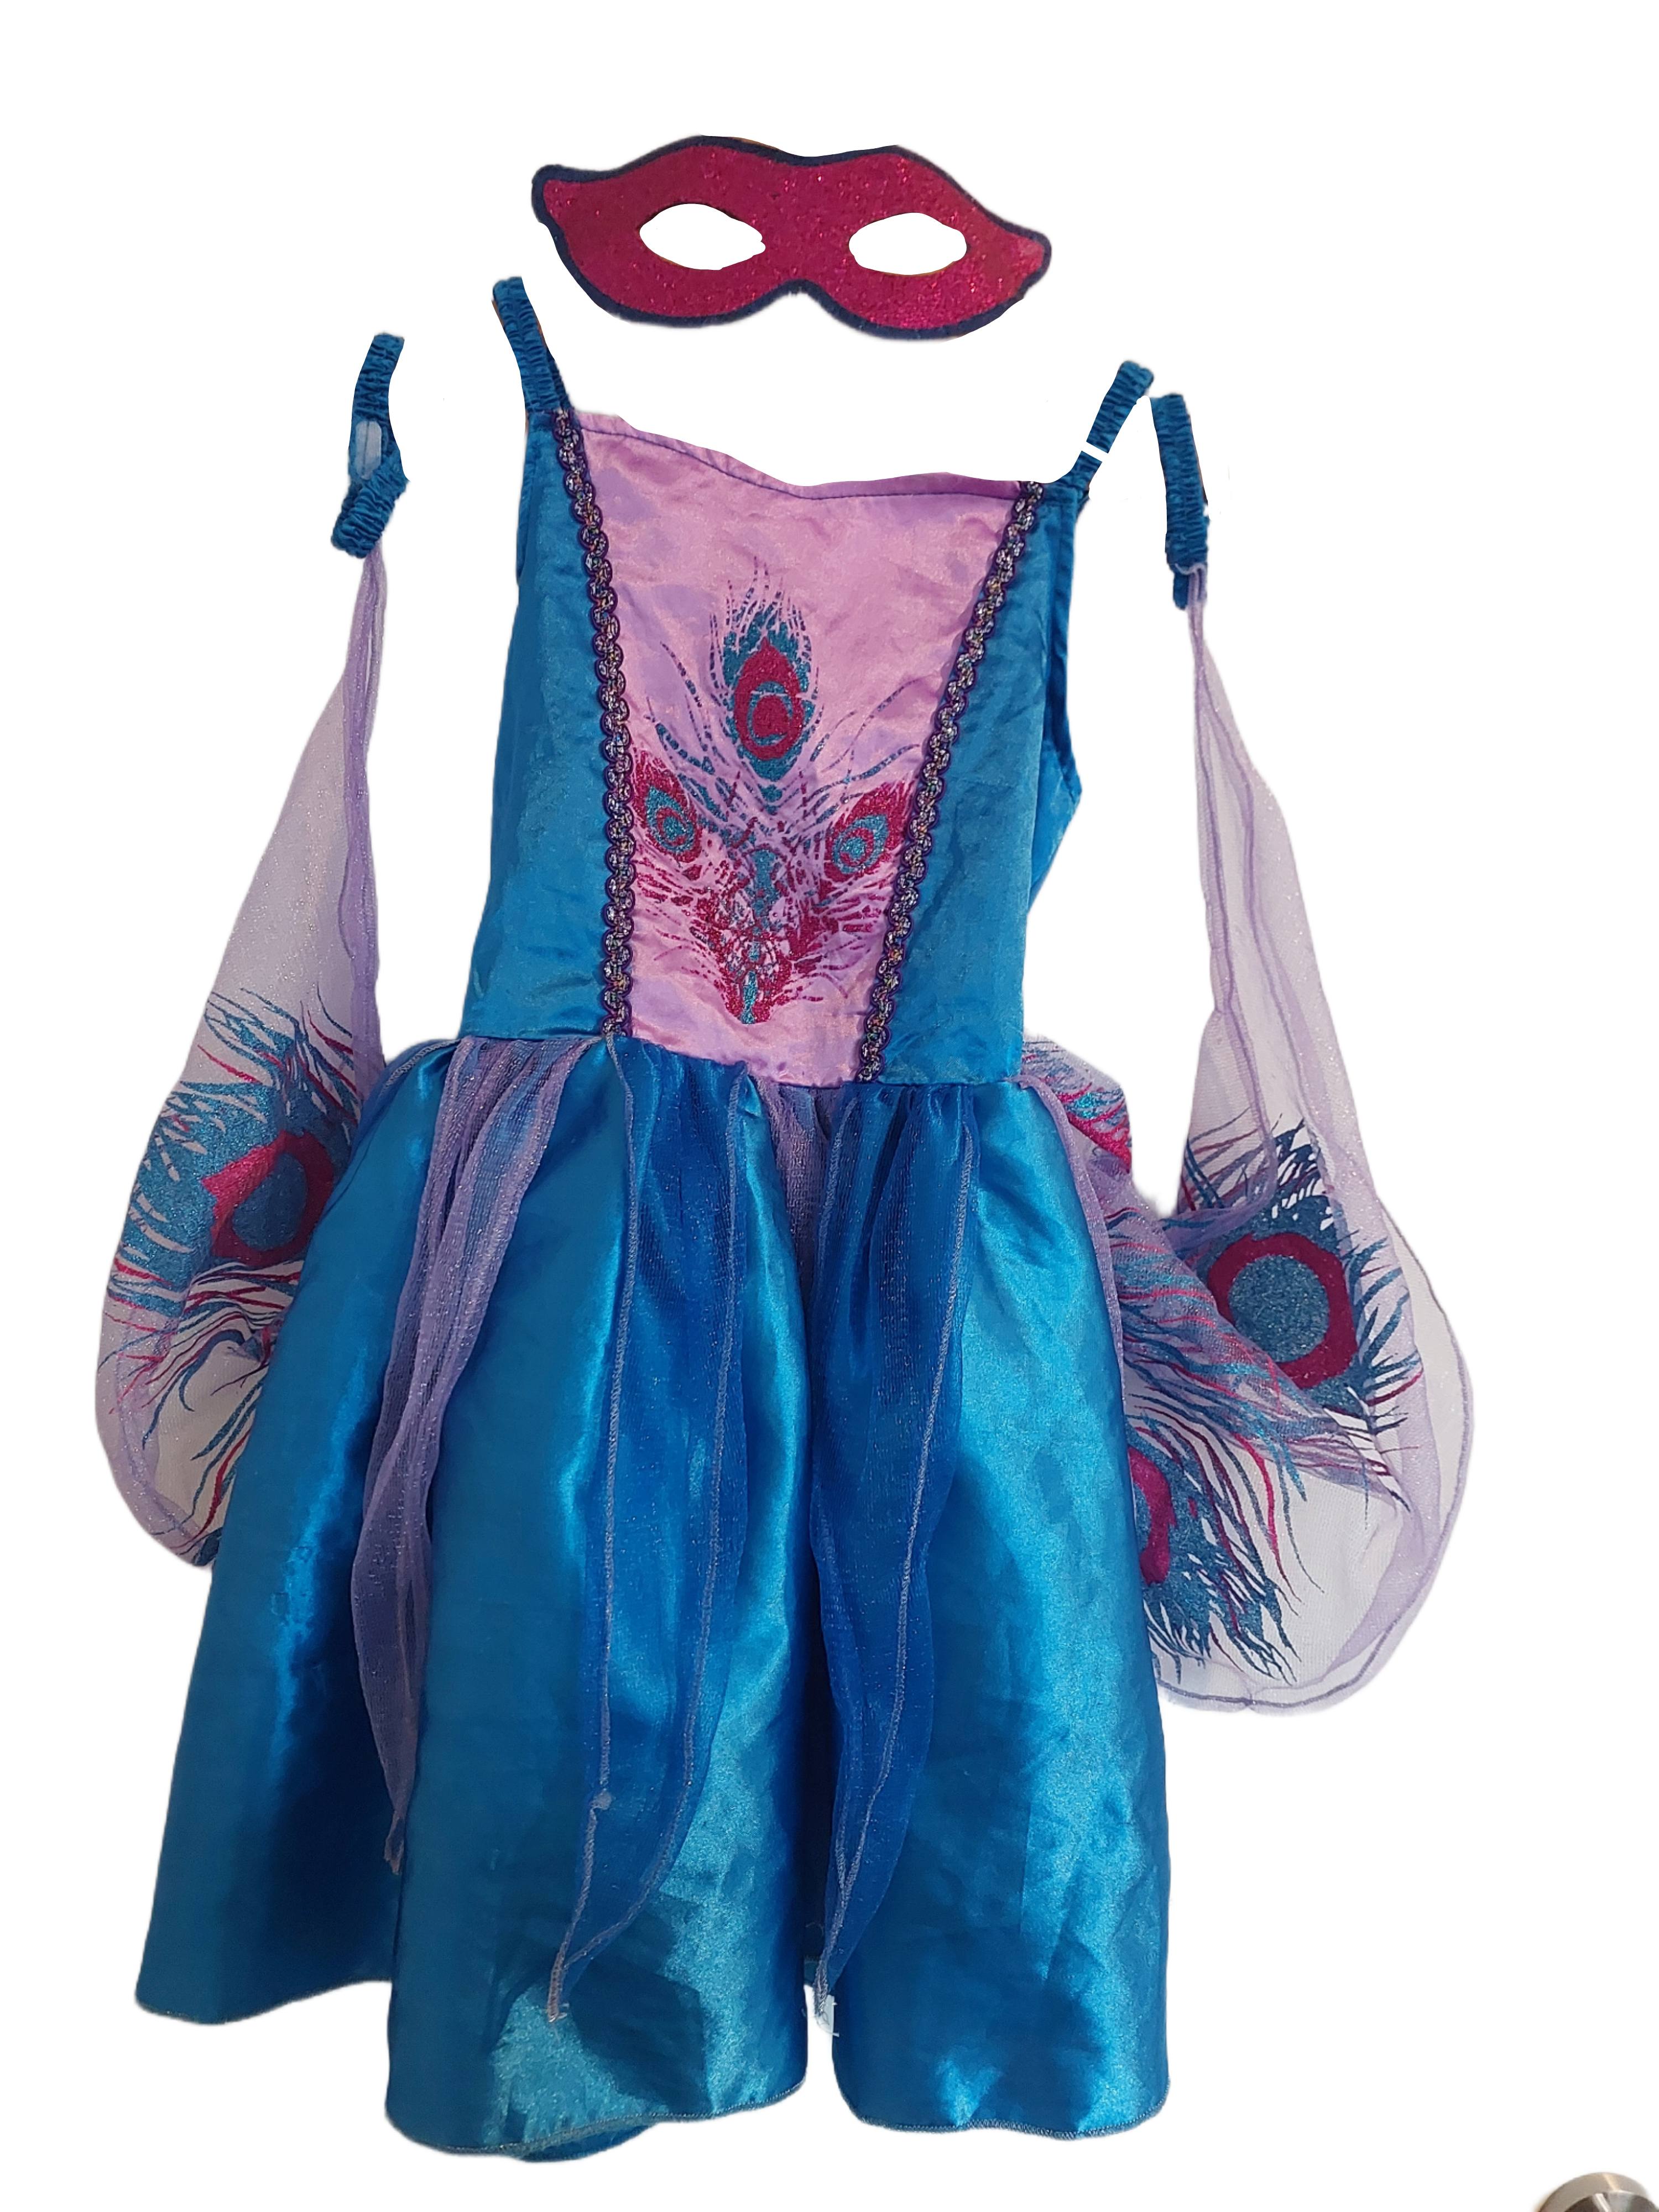 Peacock fairy costume